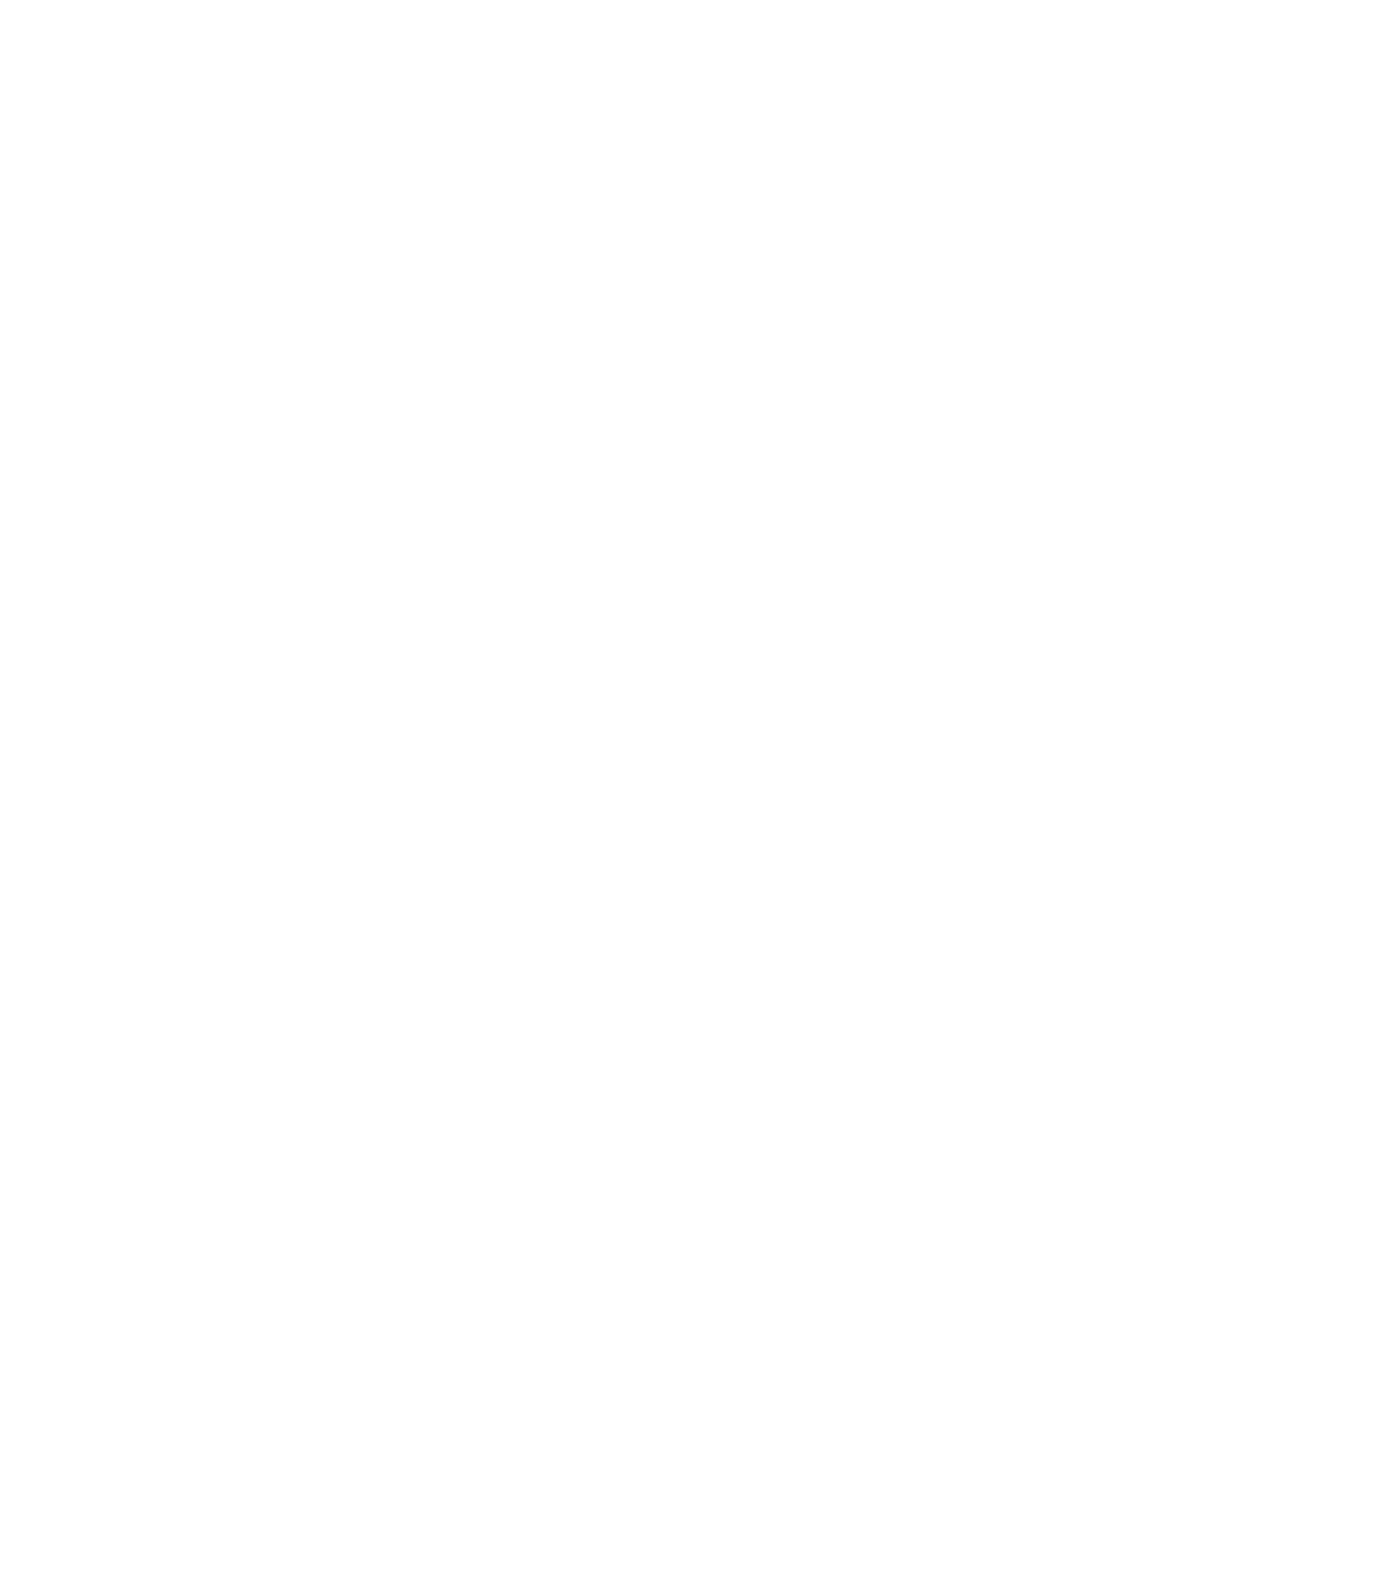 Meggitt logo in transparent PNG and vectorized SVG formats